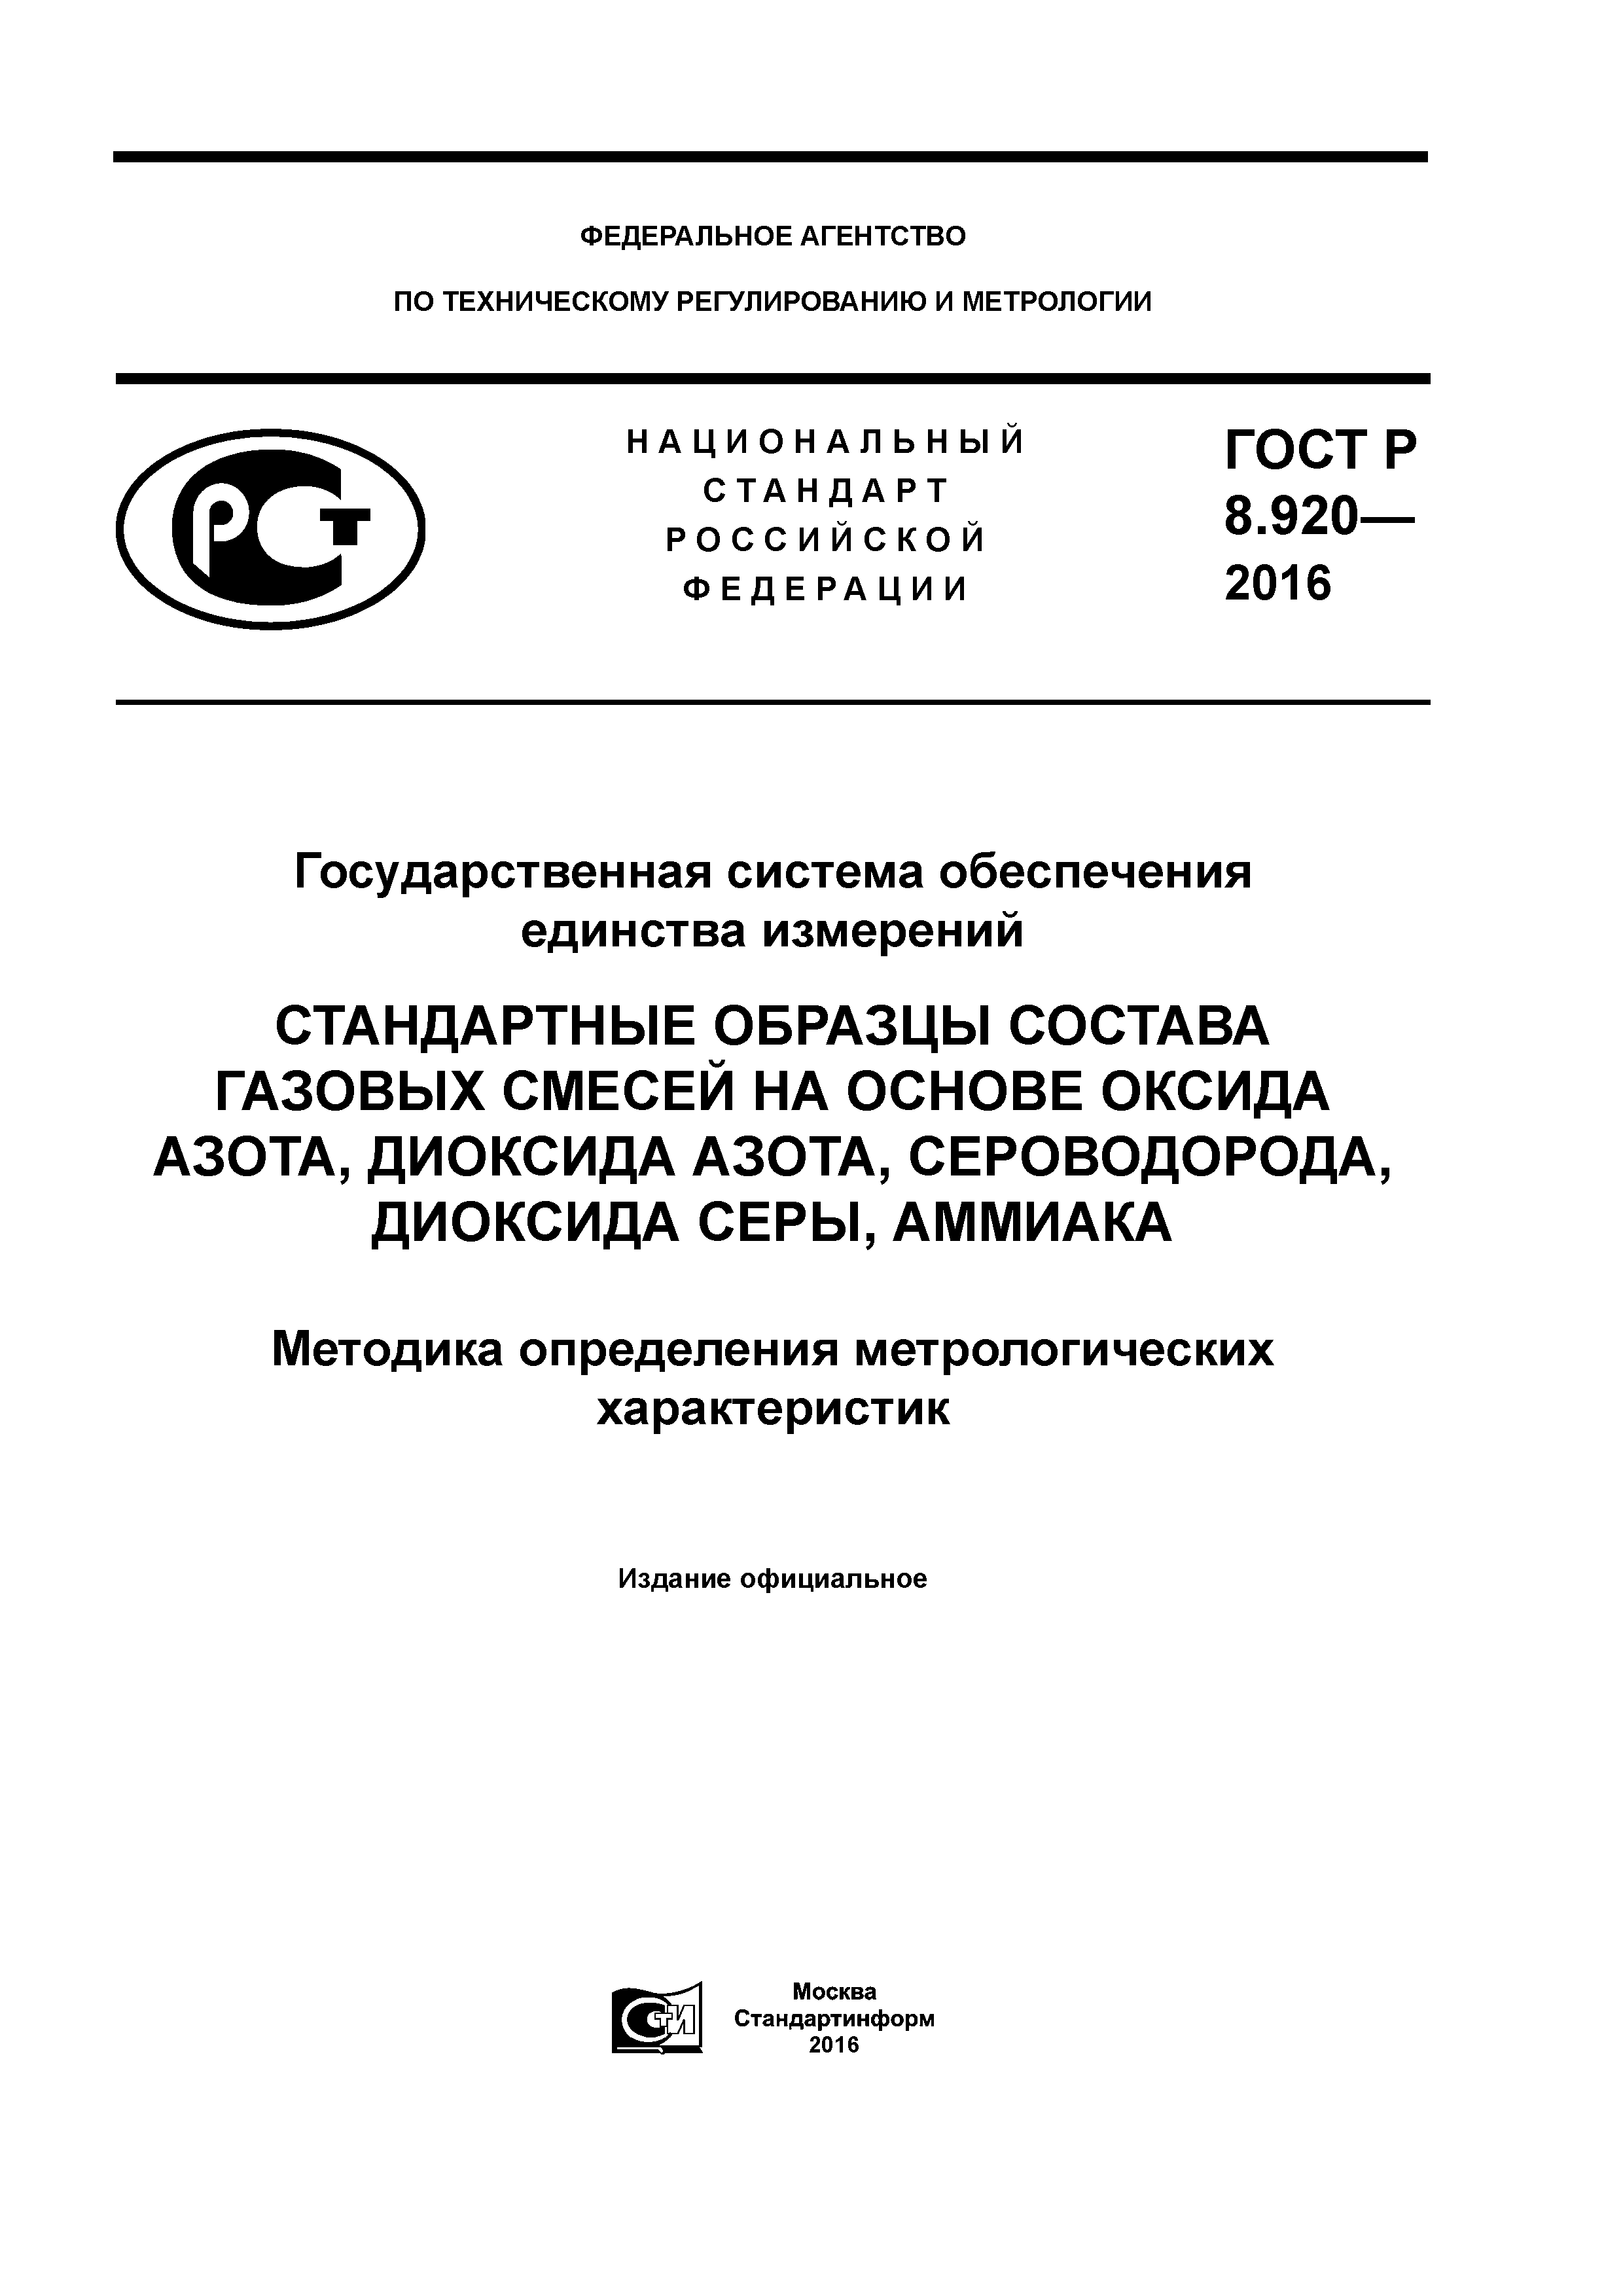 ГОСТ Р 8.920-2016